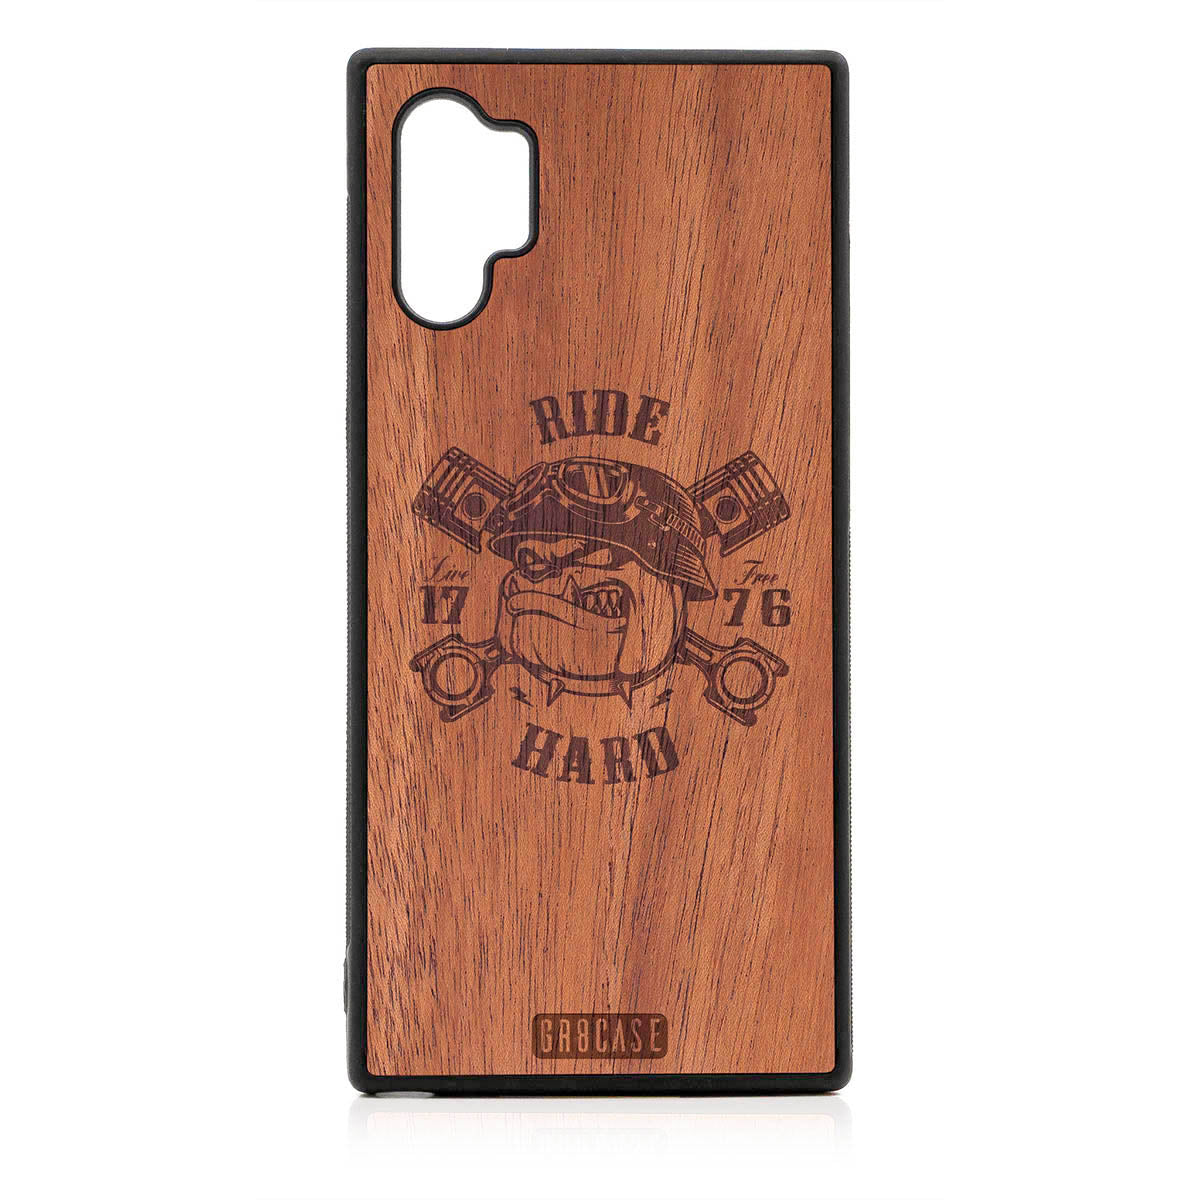 Ride Hard Live Free (Biker Dog) Design Wood Case For Samsung Galaxy Note 10 Plus by GR8CASE